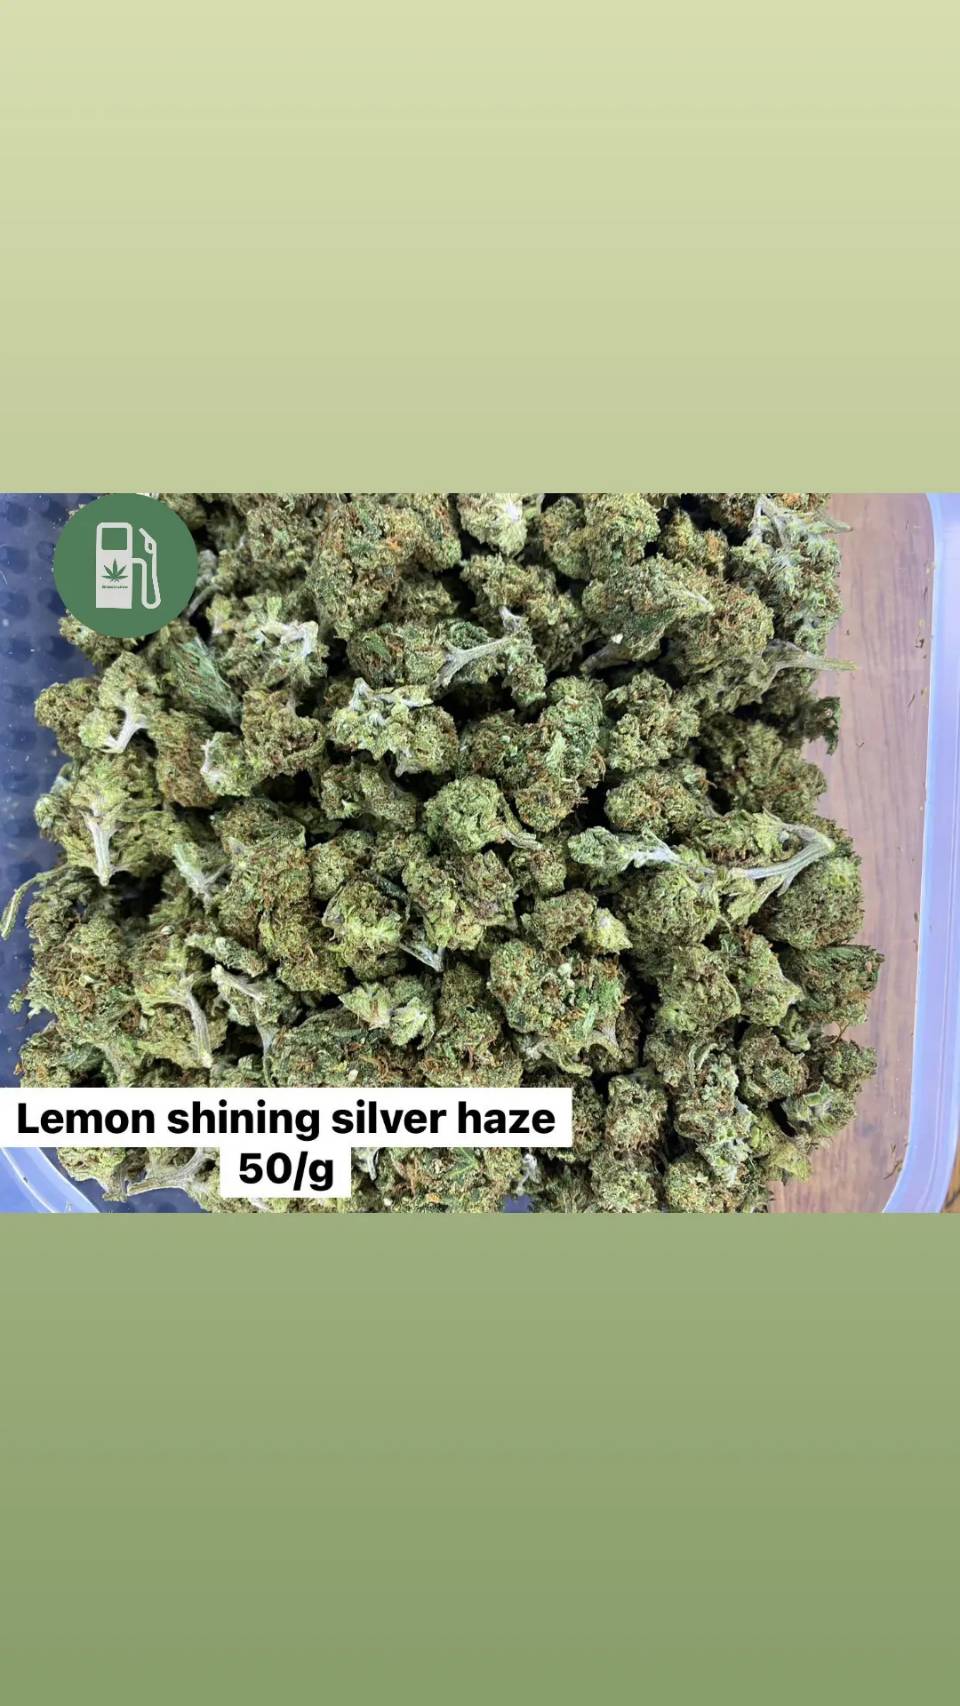 Product Image for Lemon Shining silver haze